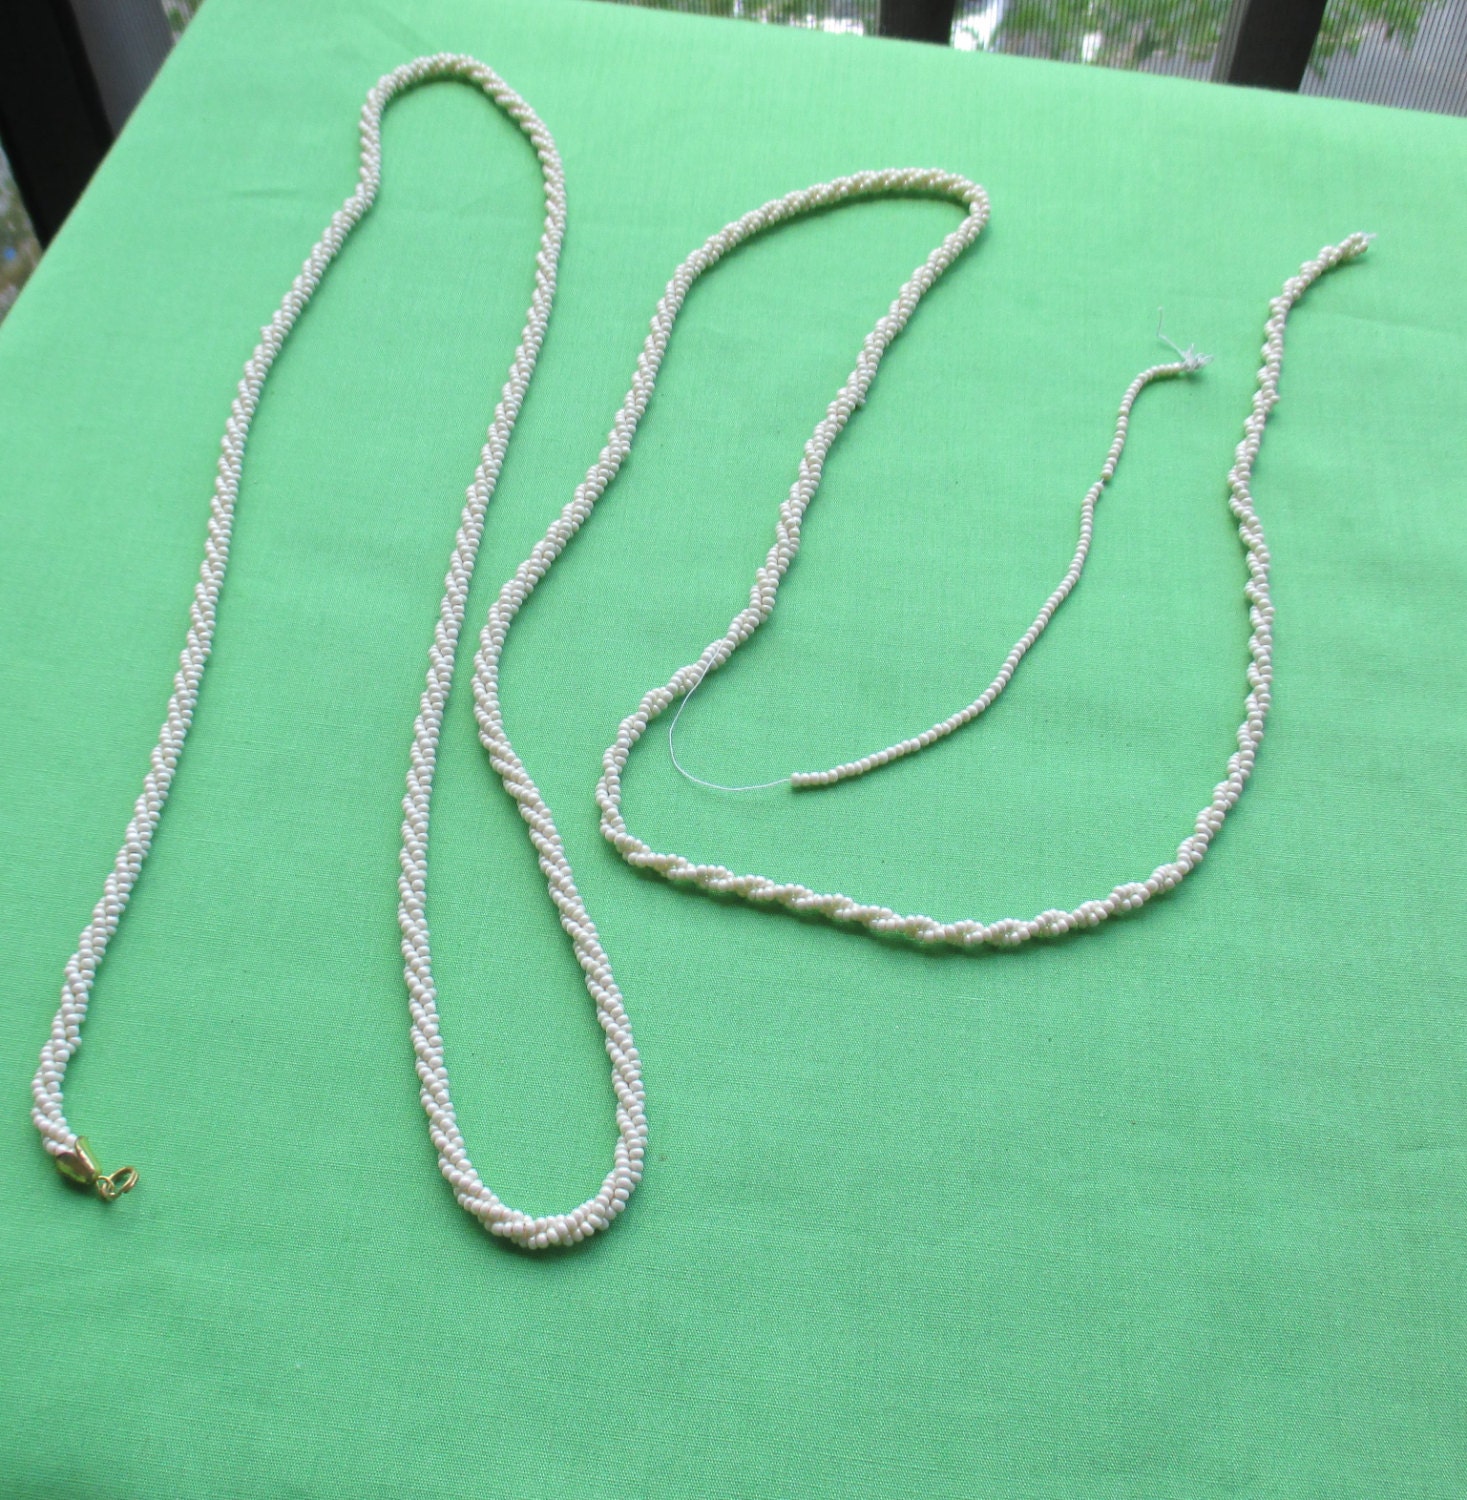 Vintage Twisted White Seed Bead Broken Long Necklace Repair